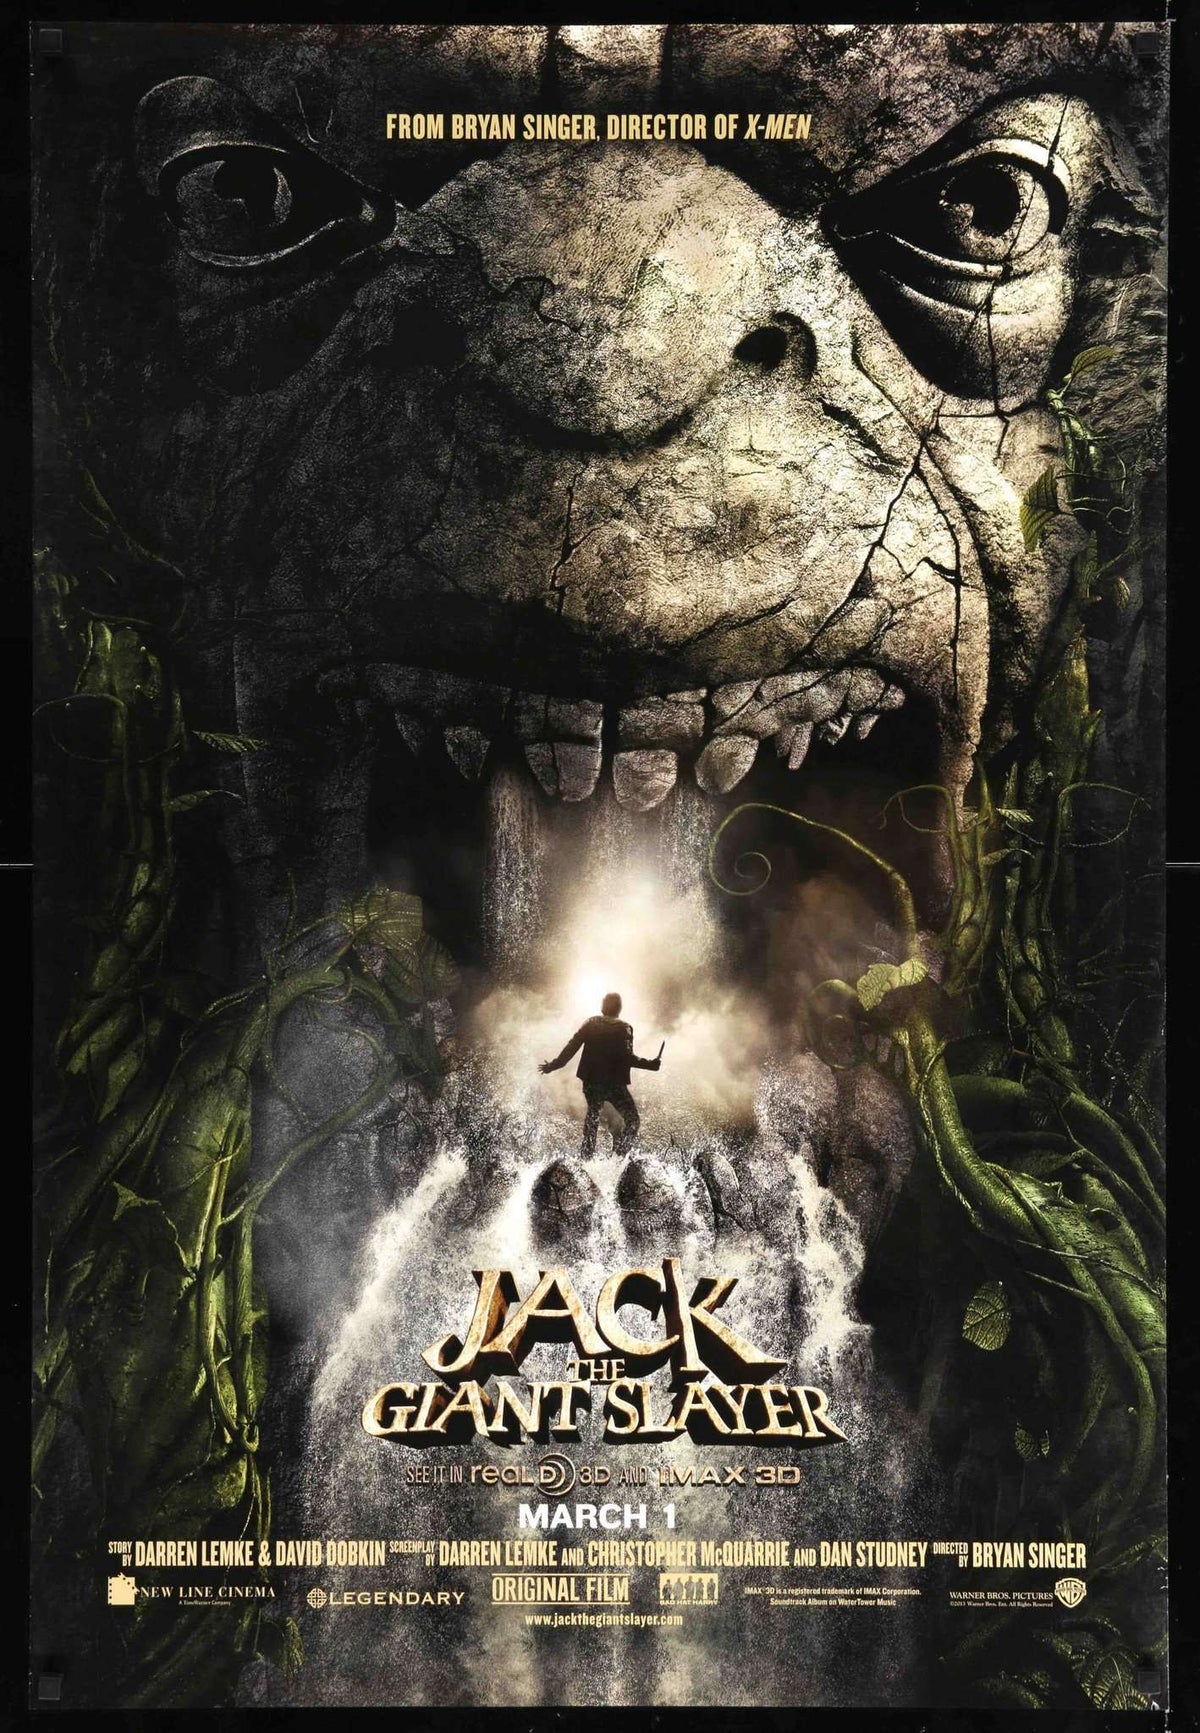 Jack the Giant Slayer (2013) original movie poster for sale at Original Film Art